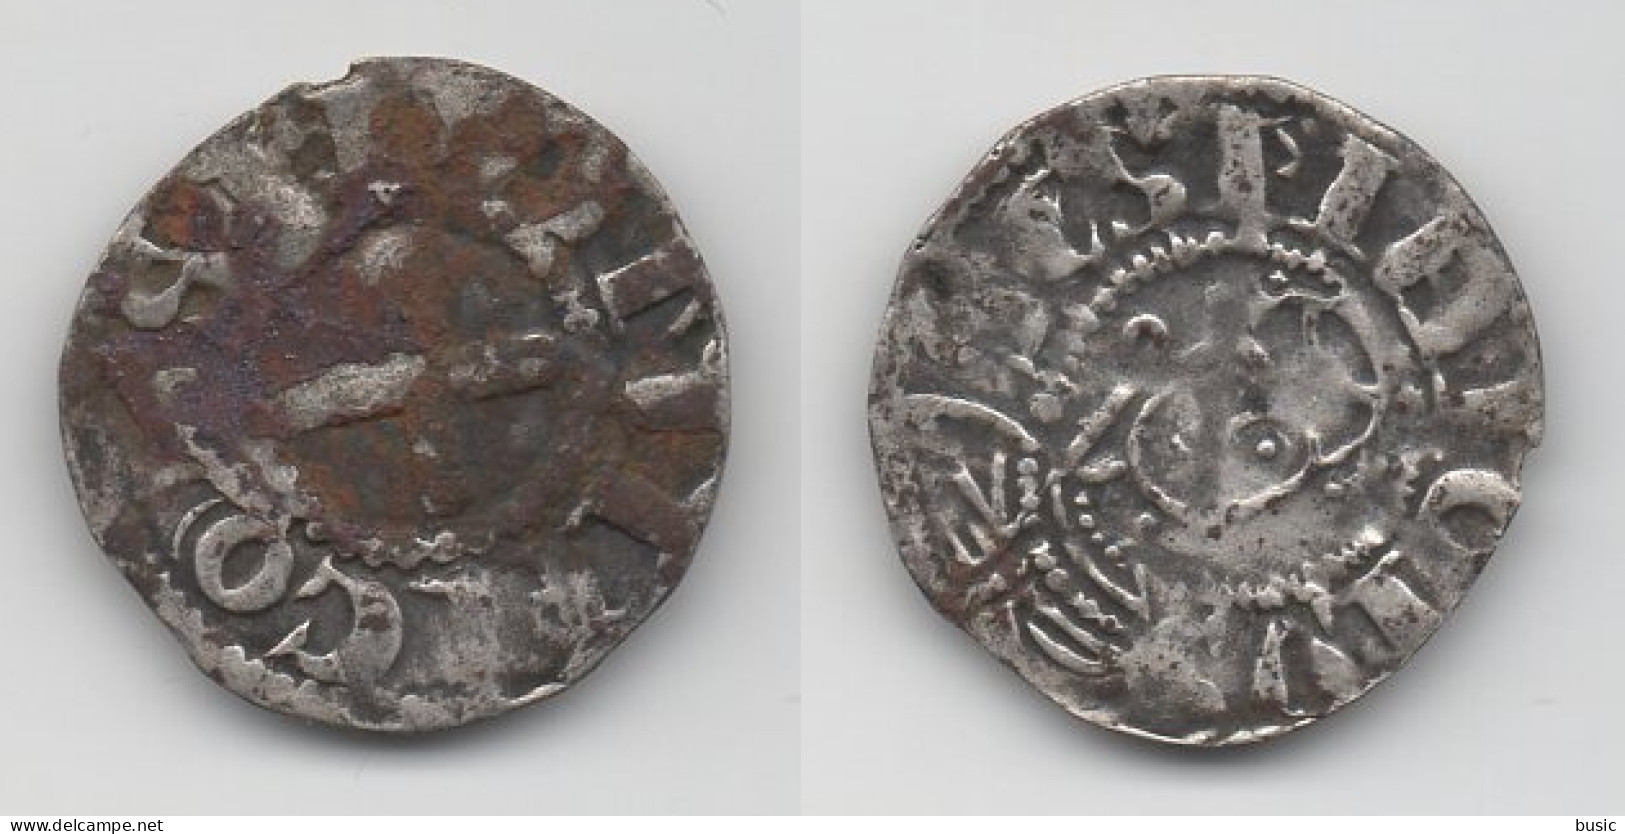 + FRANCE   + DENIER PRIEURE  DE SAUVIGNY  + - 1180-1223 Filips II Augustus